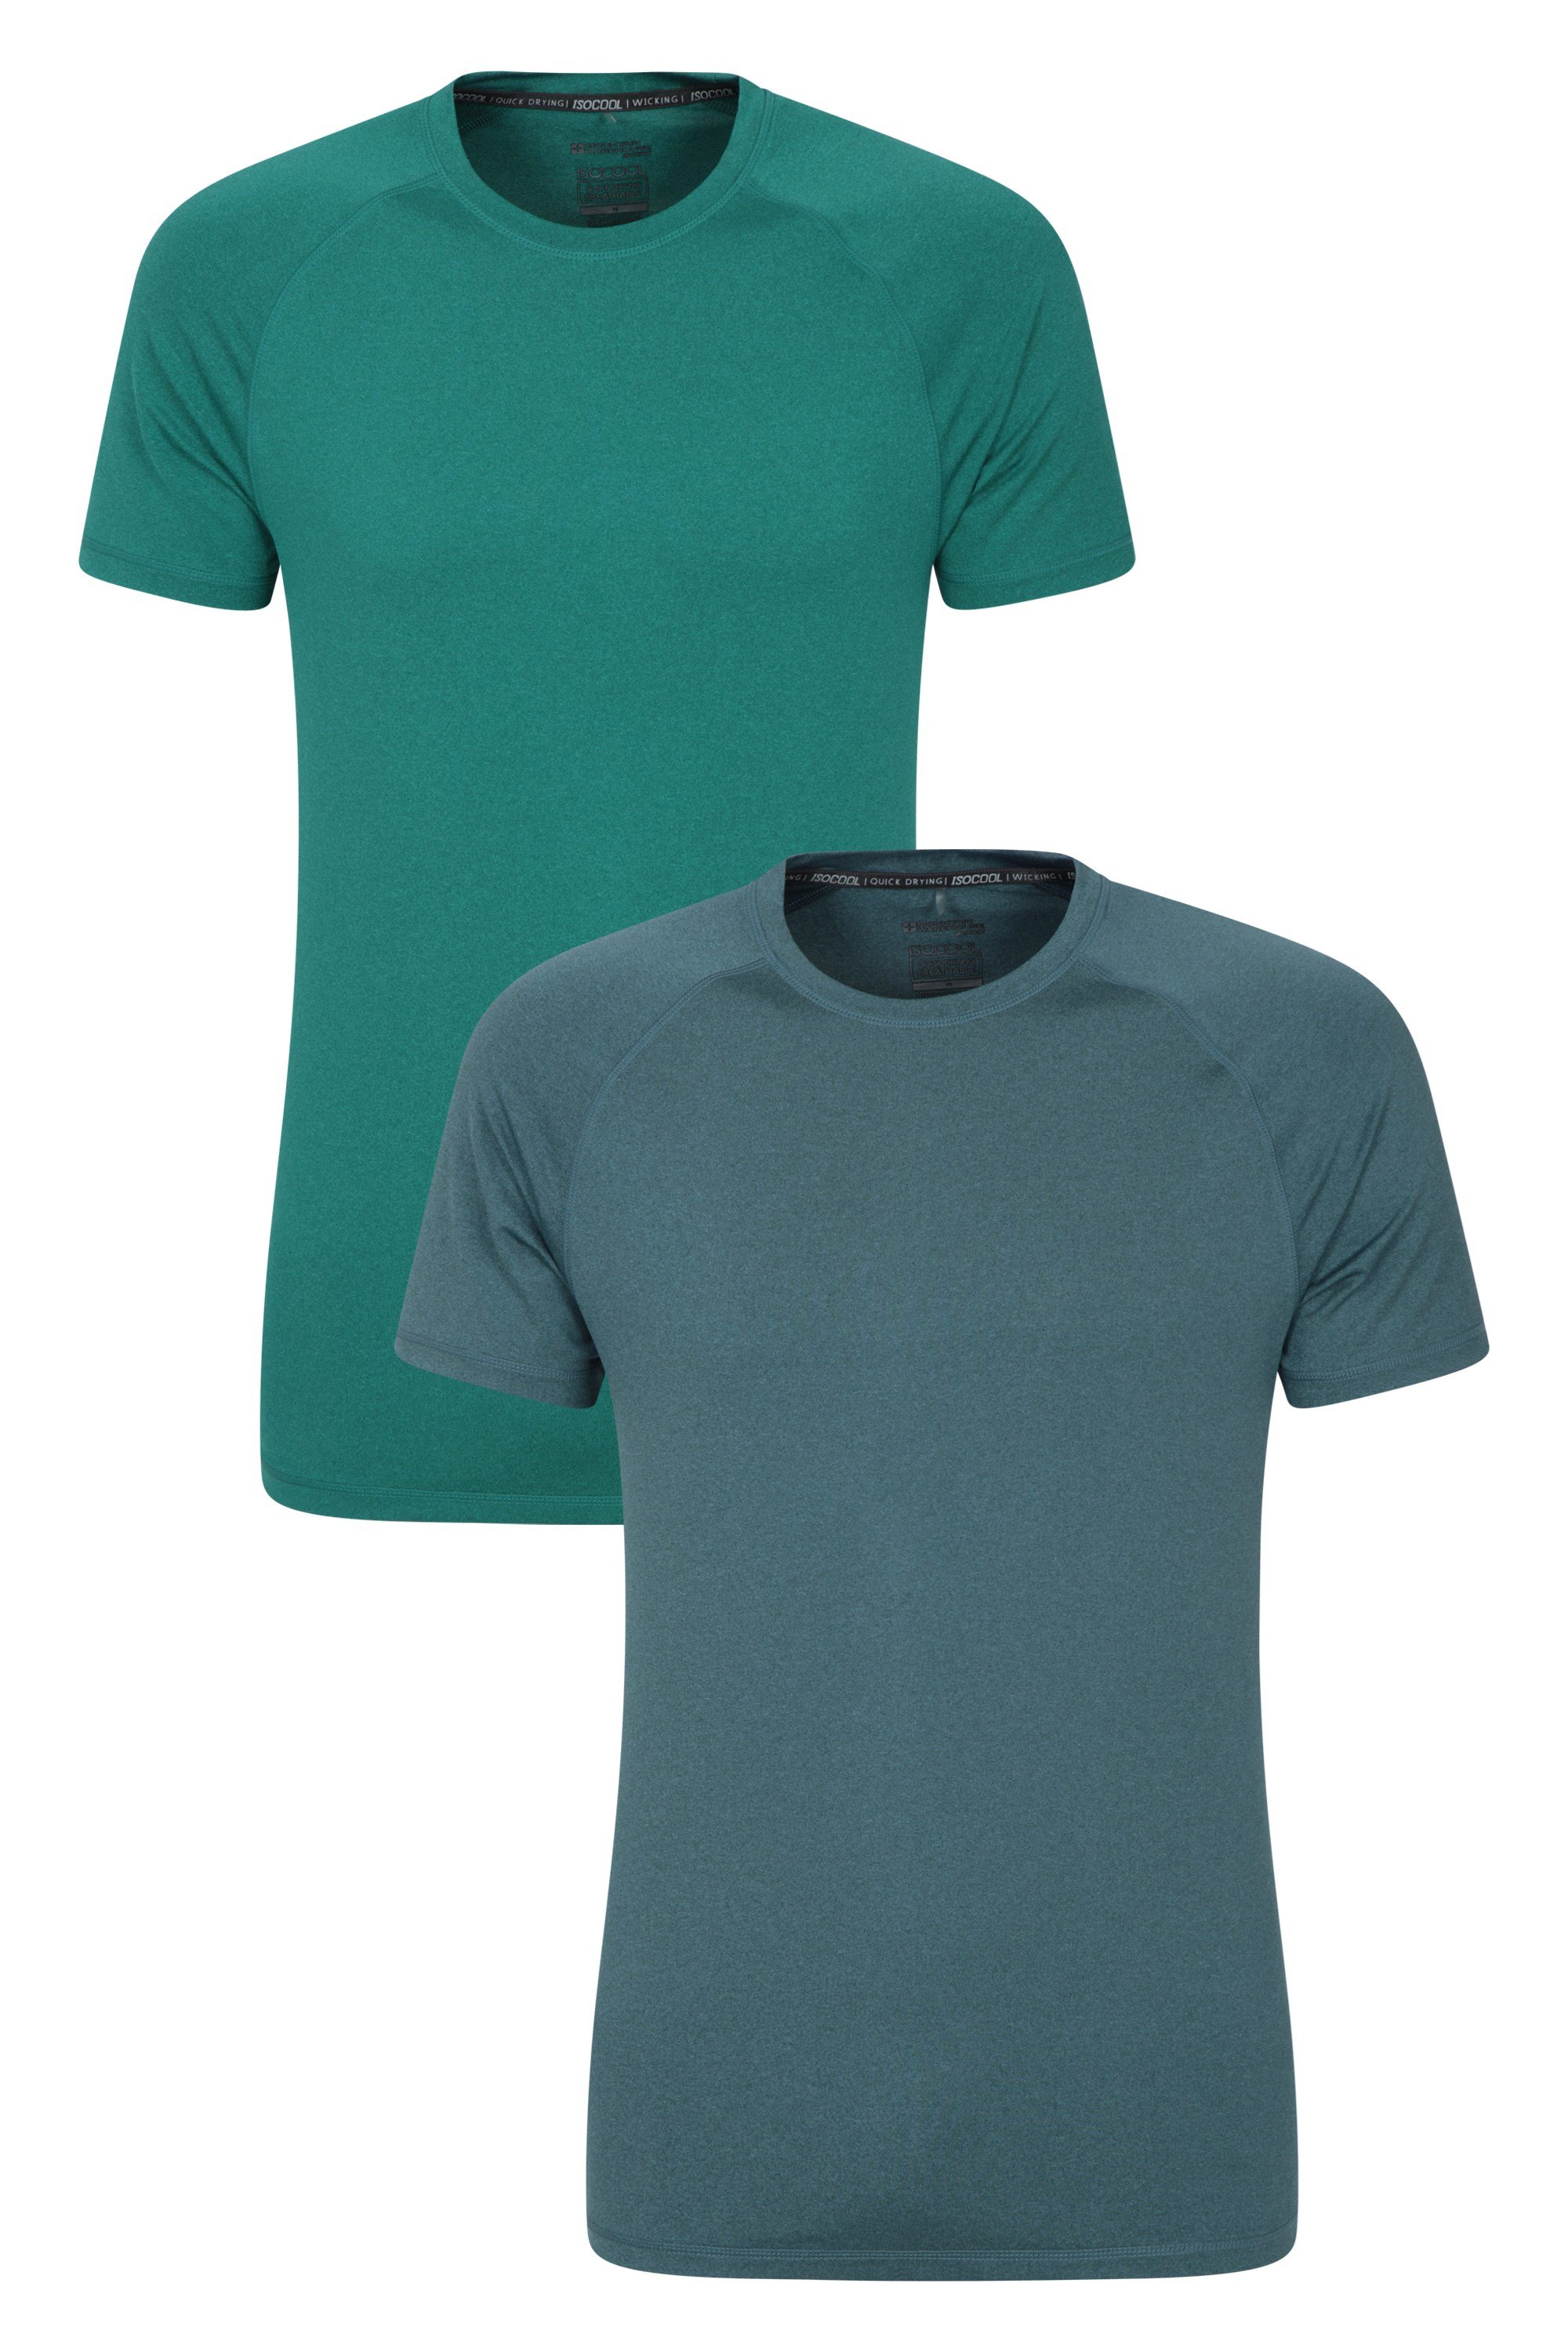 Agra Mens Isocool T-Shirt Multipack - Green